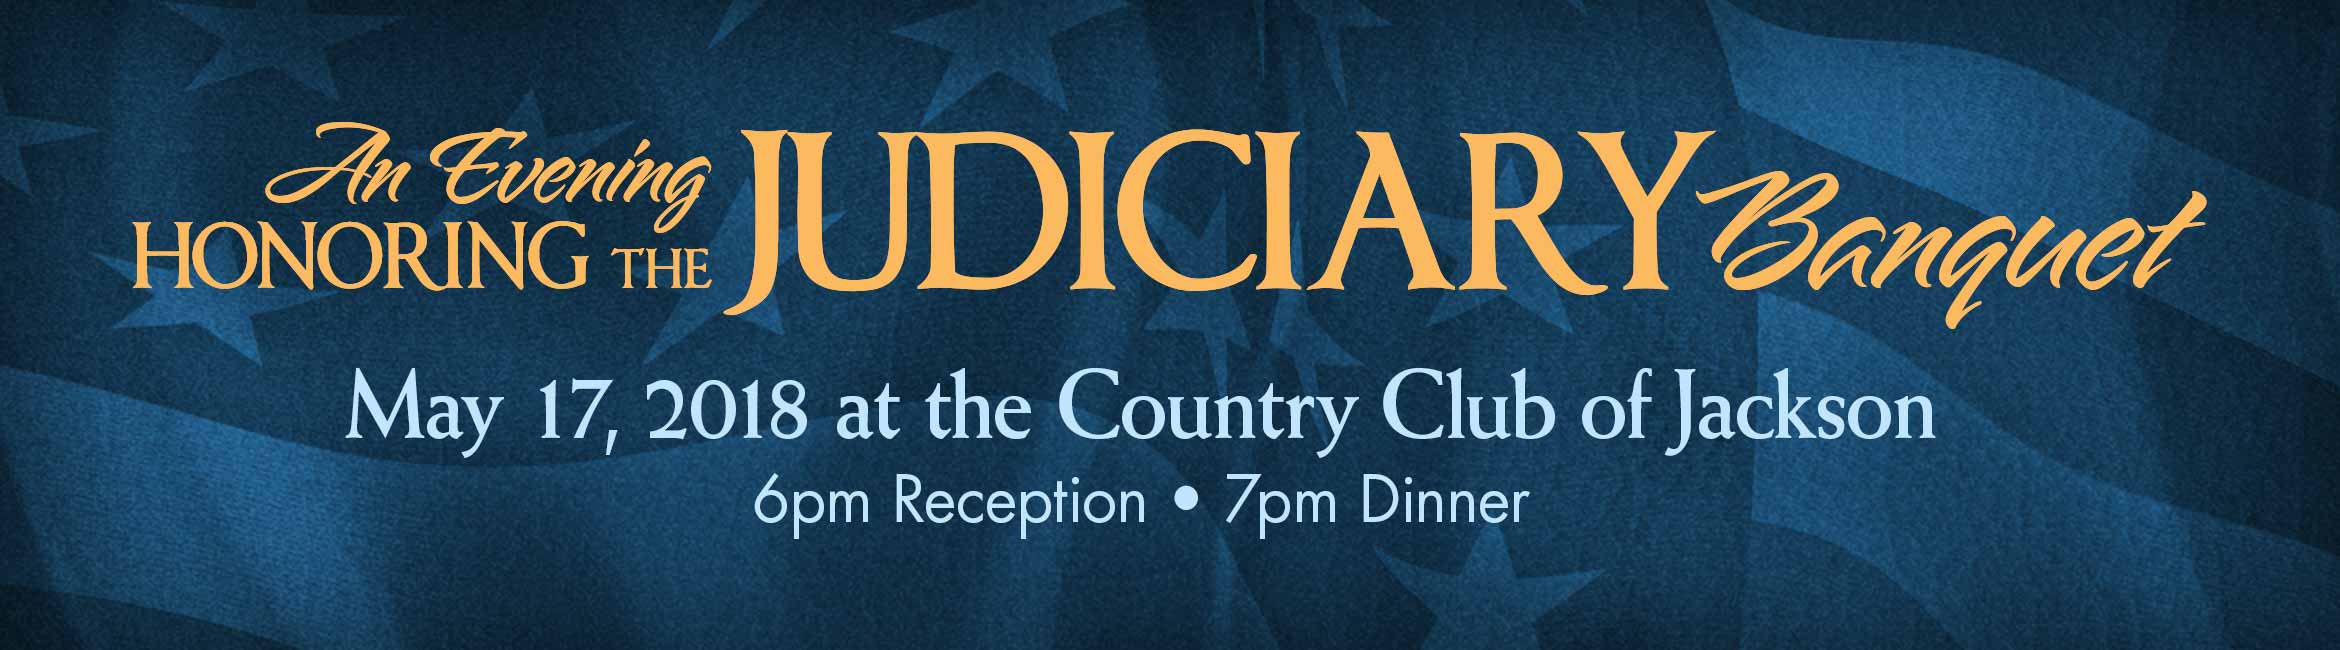 An Evening Honoring the Judiciary